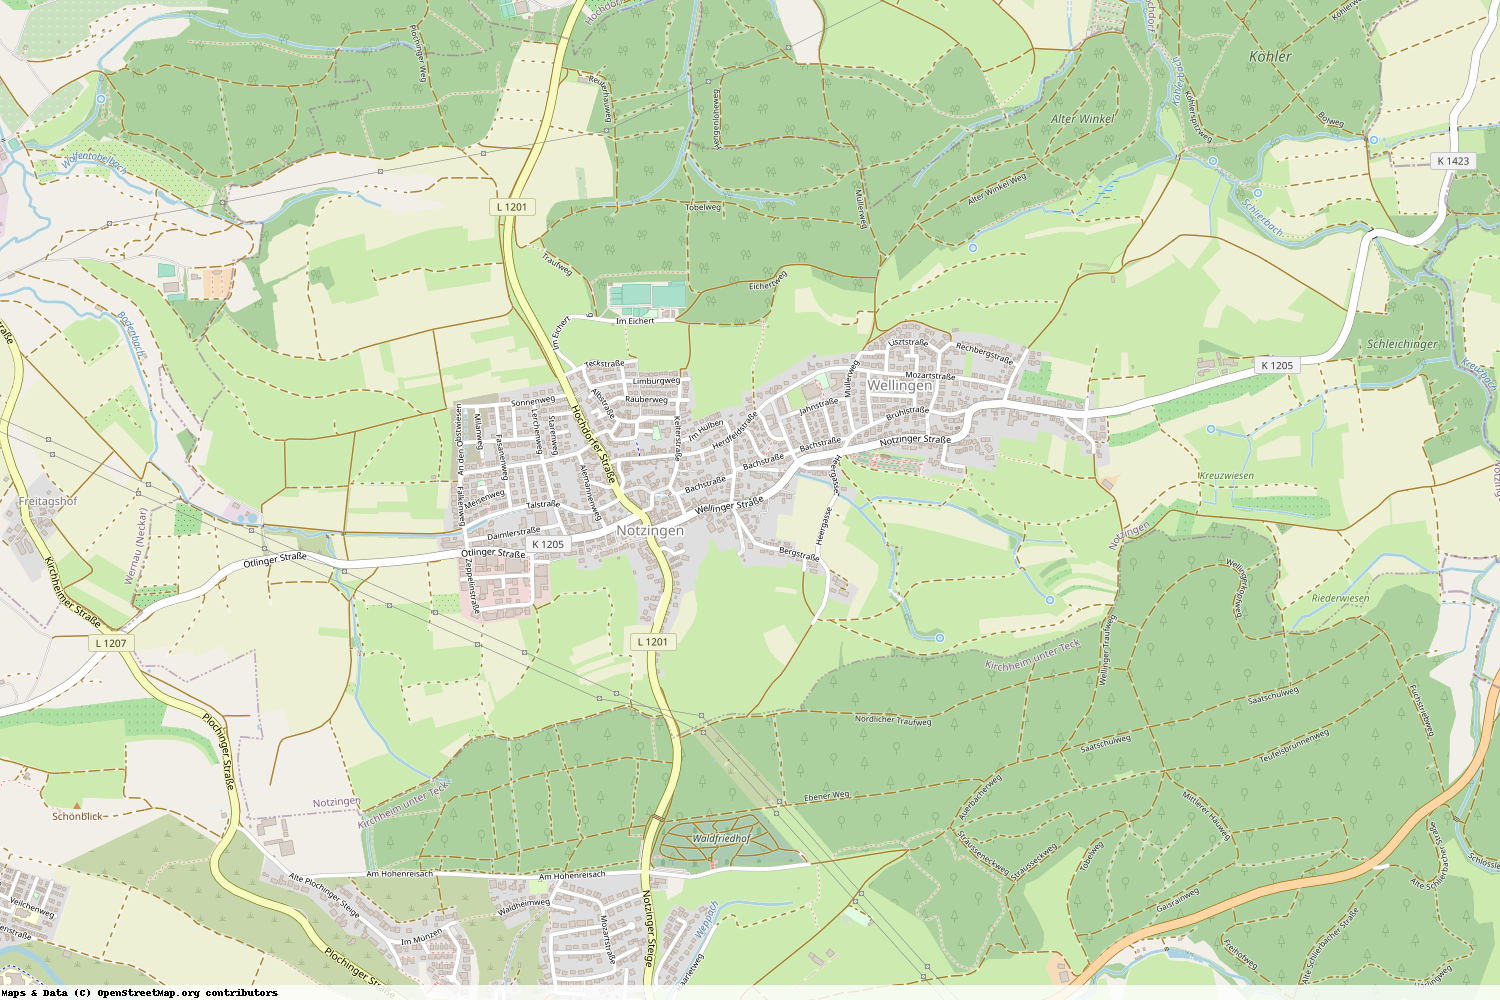 Ist gerade Stromausfall in Baden-Württemberg - Esslingen - Notzingen?